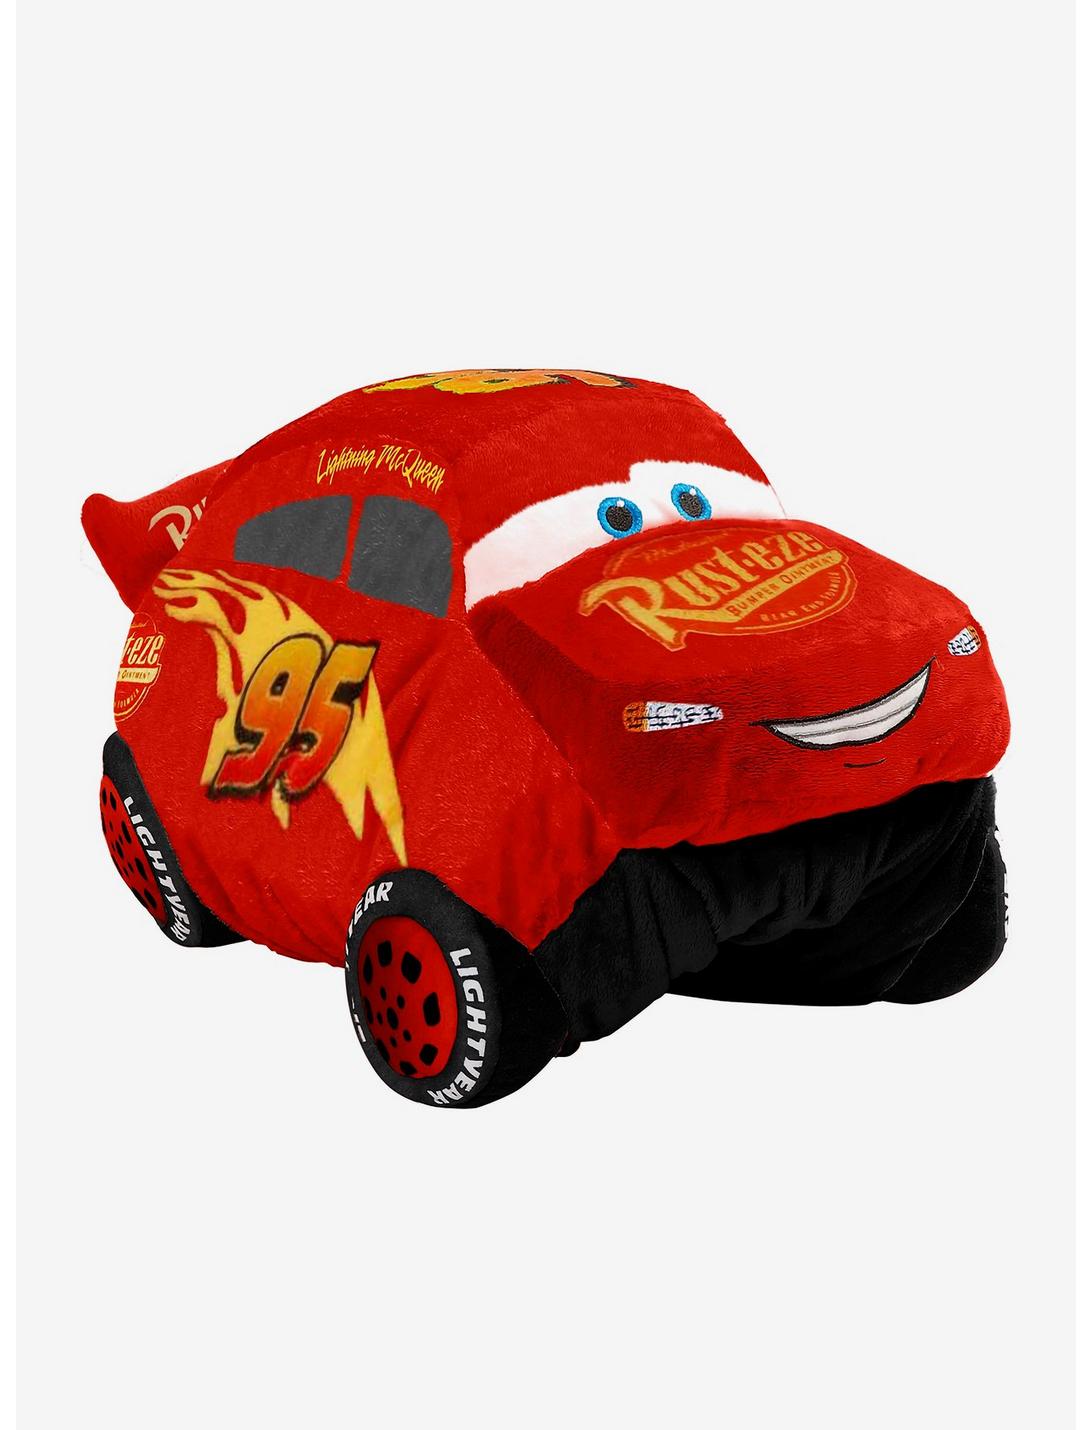 Disney Pixar Cars Pillow Pets Lightning McQueen Plush Toy